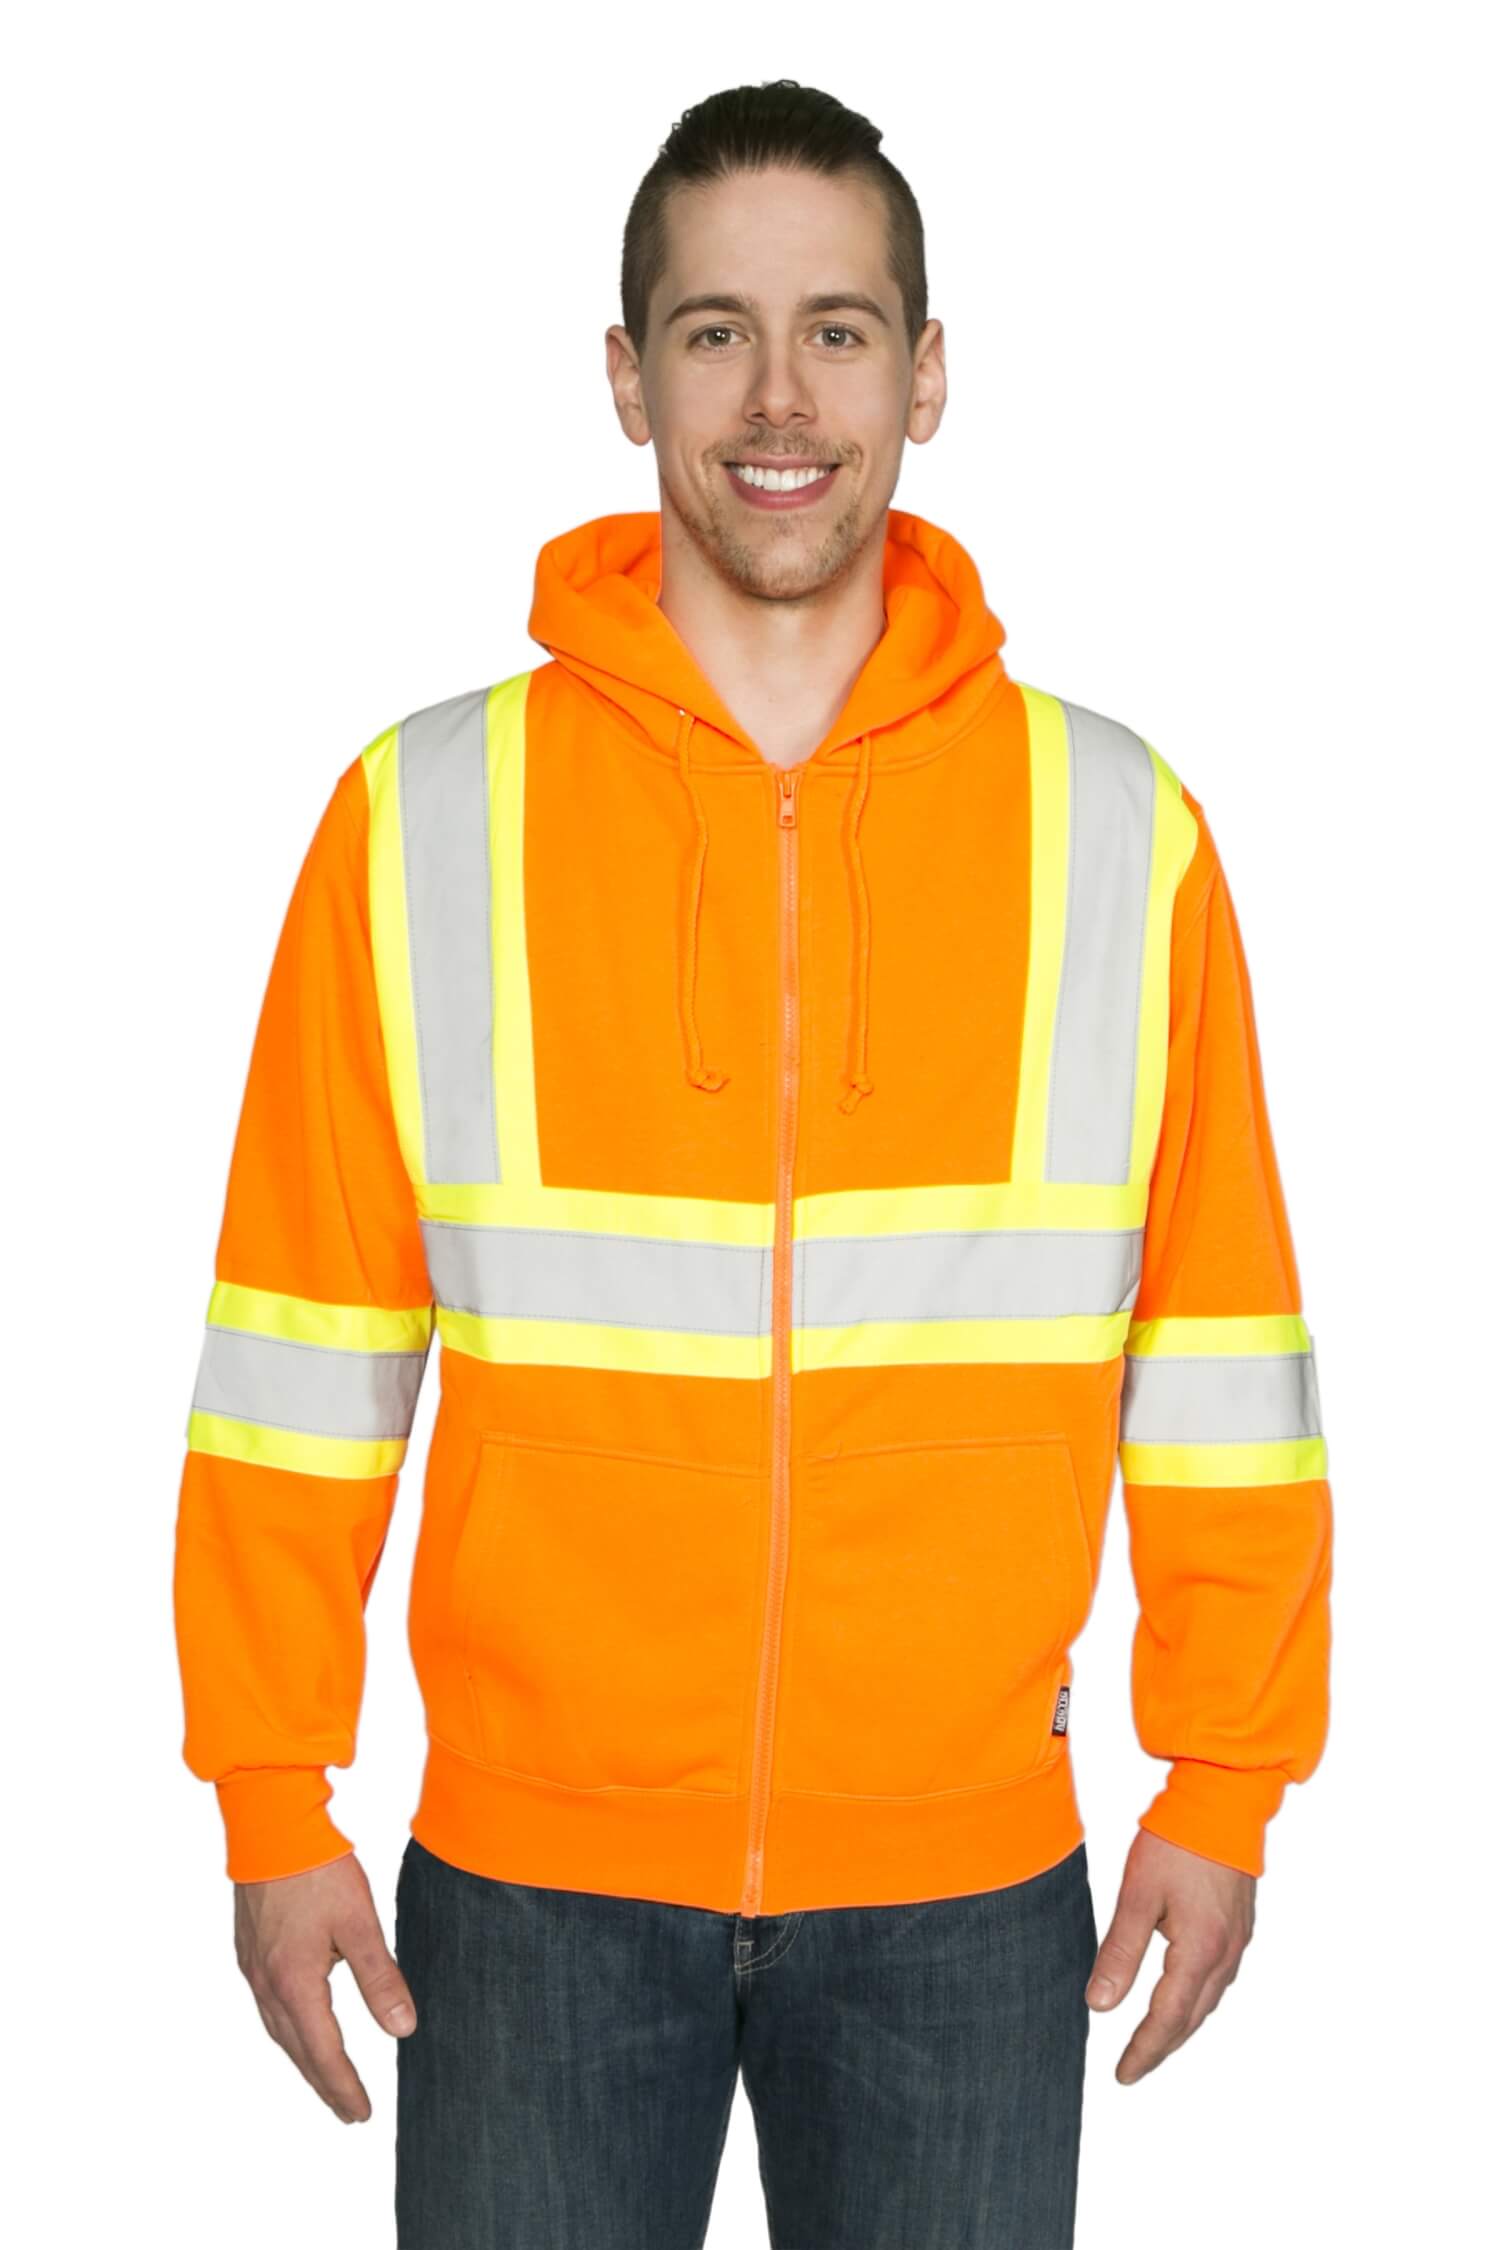 Shop | Customizable sports and safety wear, Edmonton, Alberta